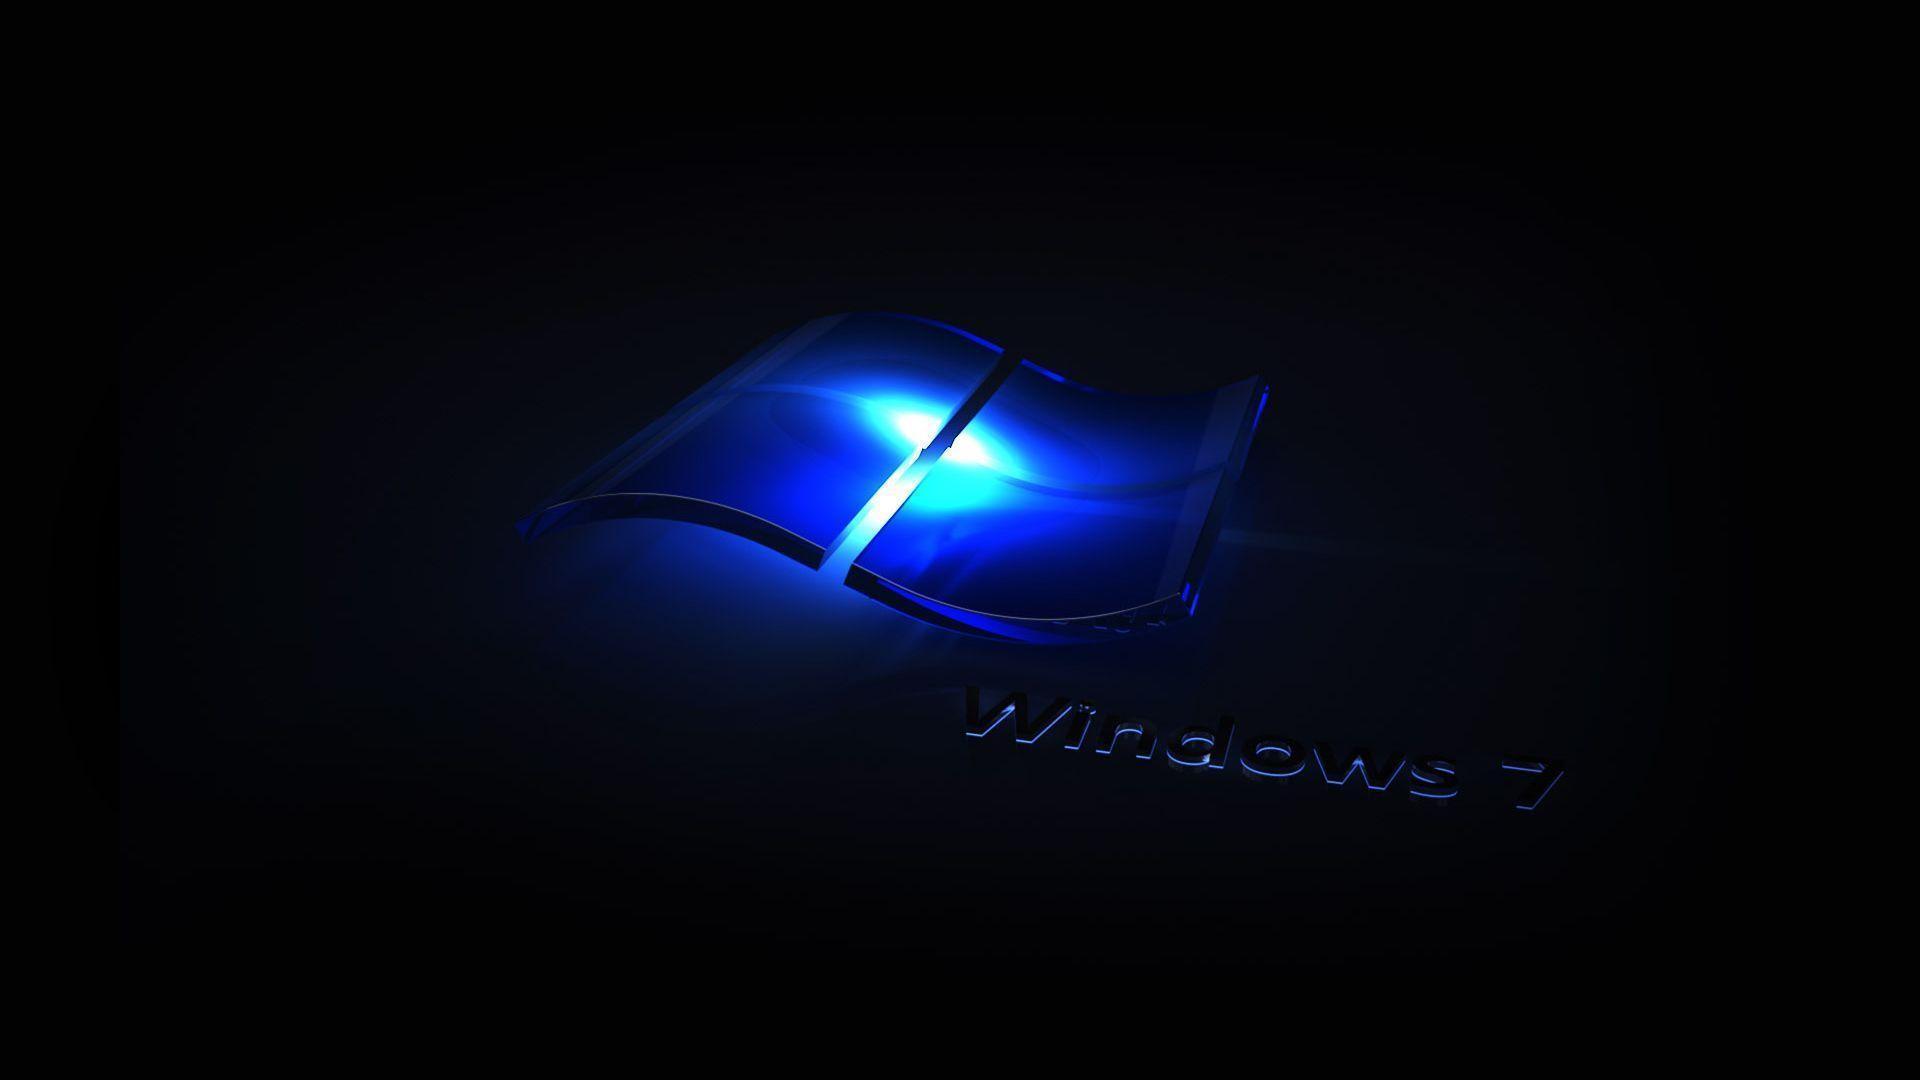 Desktop Wallpaper · Gallery · Windows 7 · Blue Light Windows 7